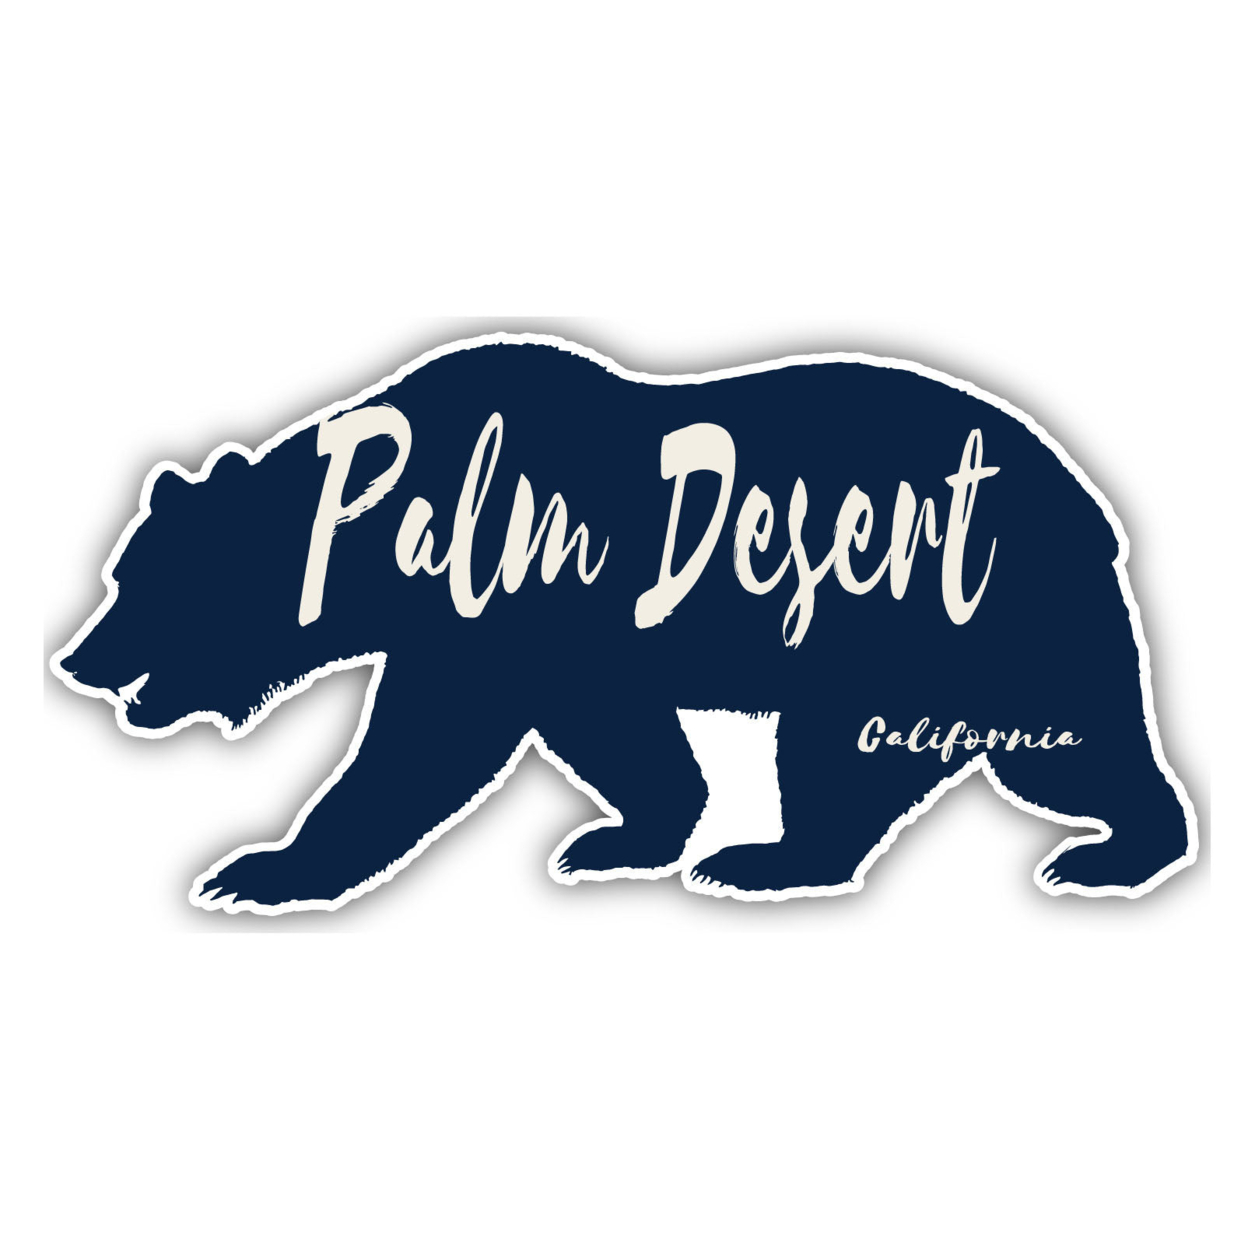 Palm Desert California Souvenir Decorative Stickers (Choose Theme And Size) - Single Unit, 4-Inch, Tent